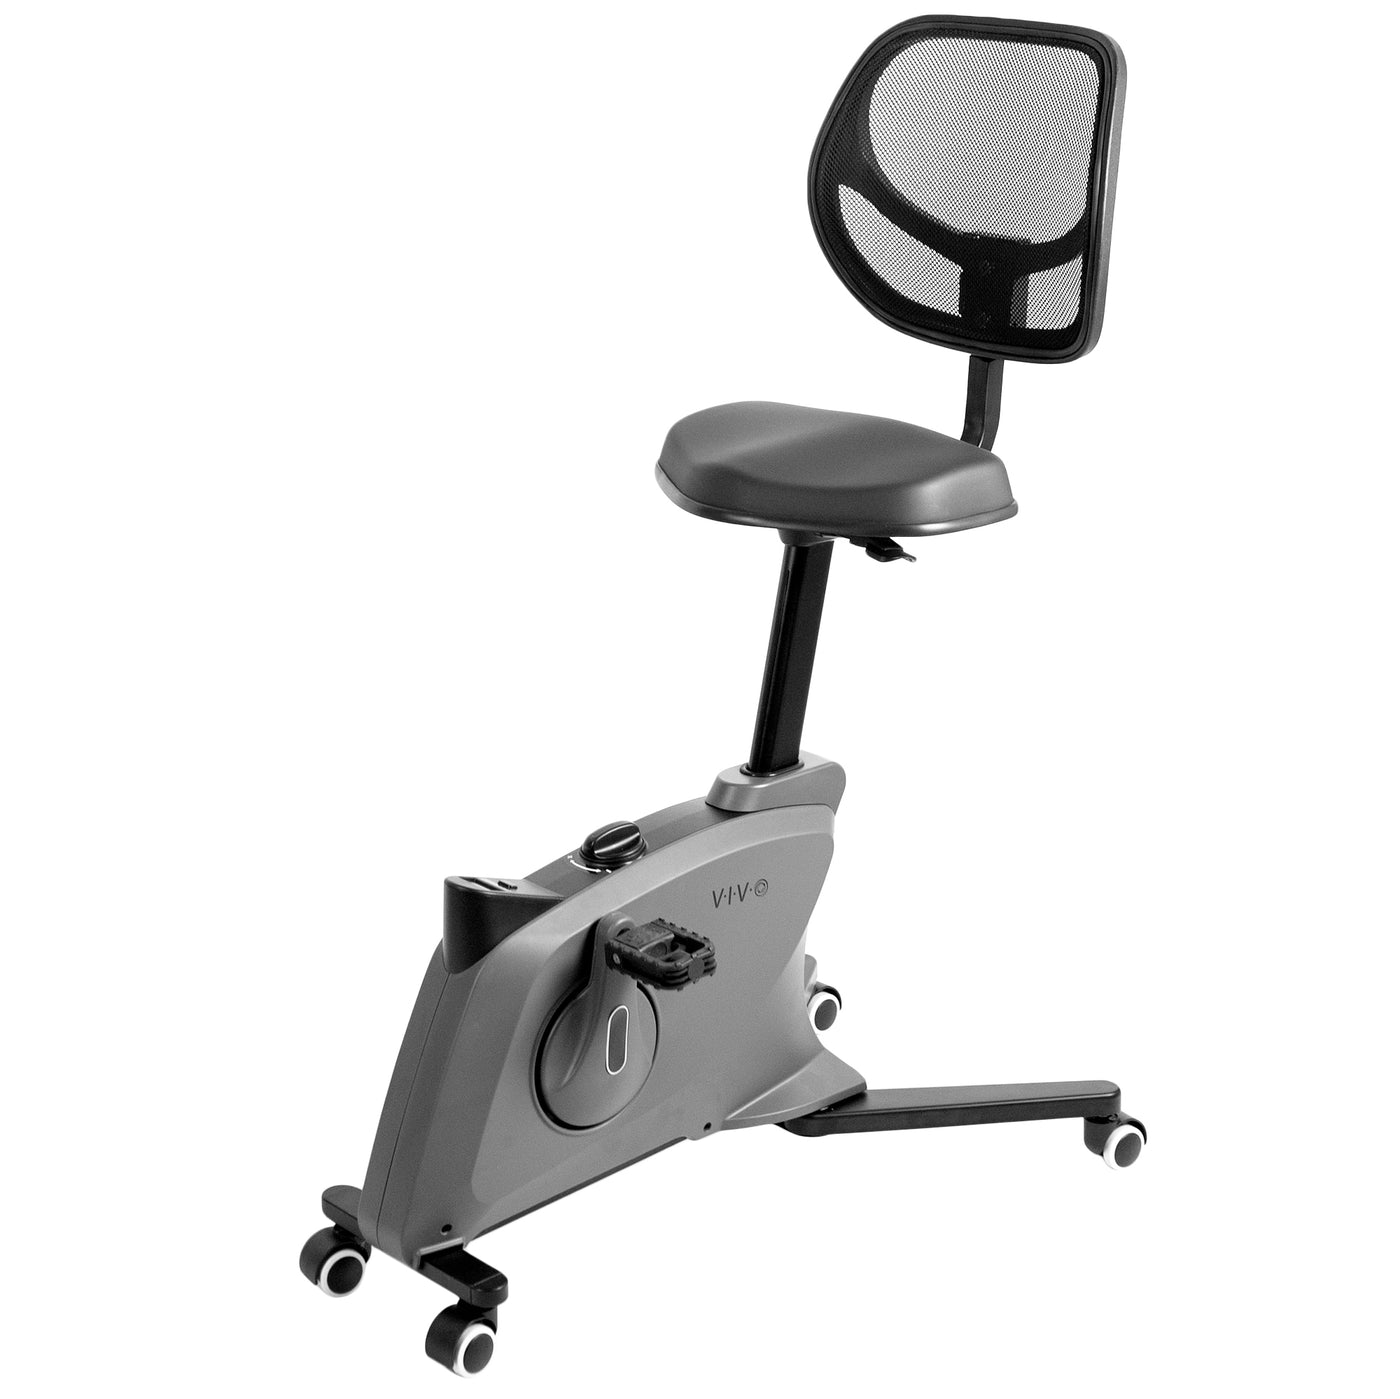 Sturdy portable height adjustable deskside exercise bike for an active workstation.